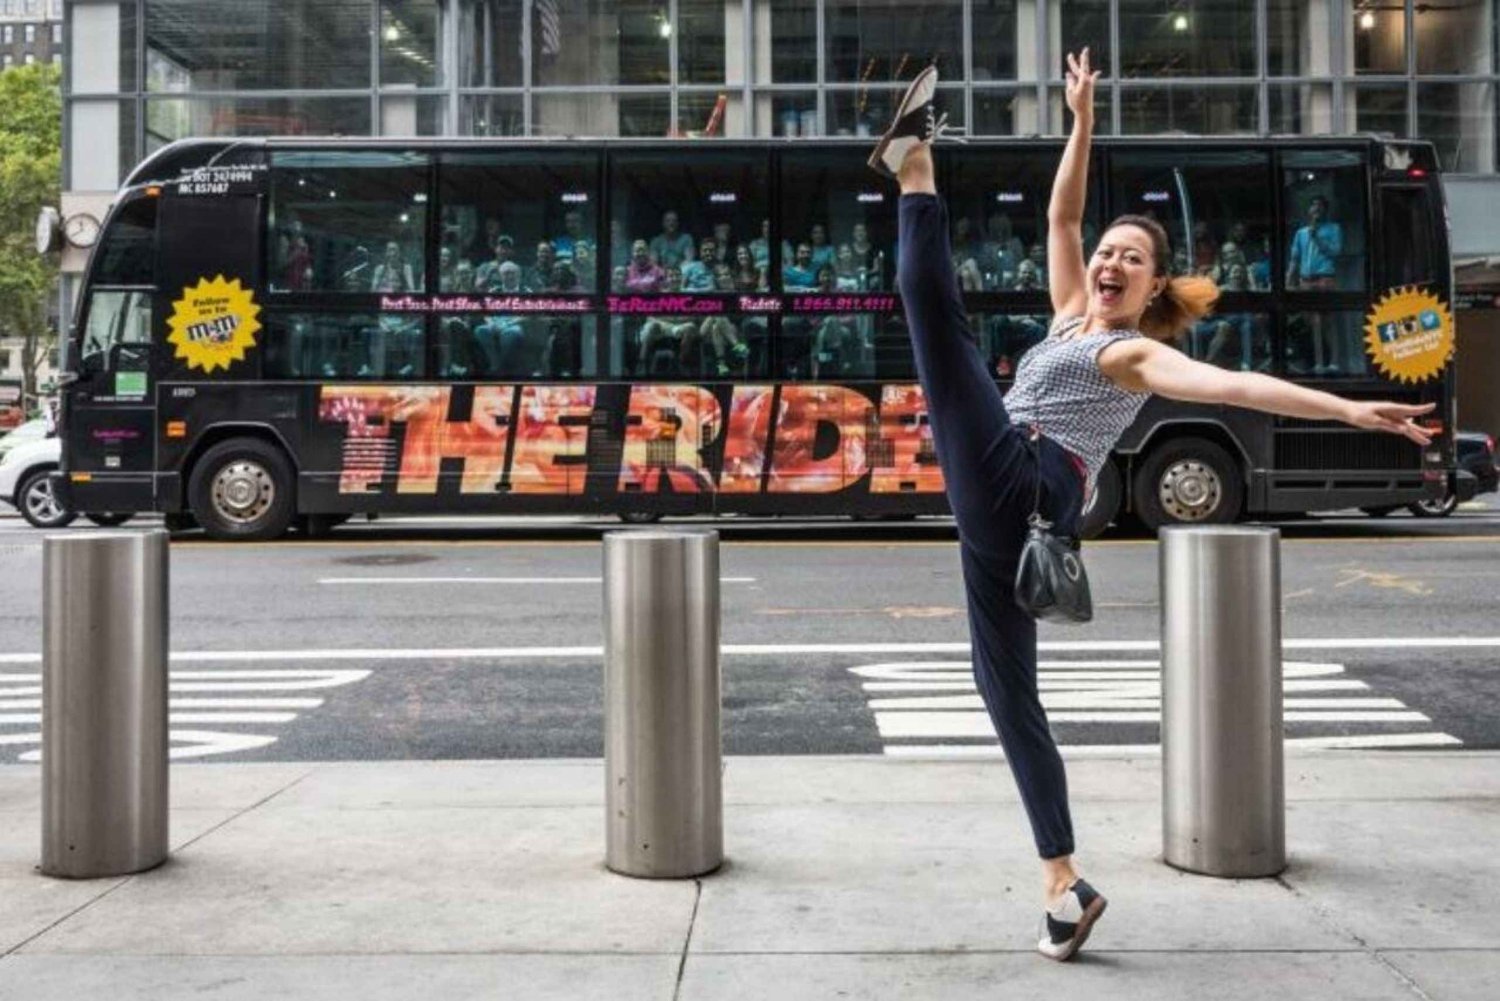 NYC: The Ride Theatre Bus & Best of Manhattan Tour a pie